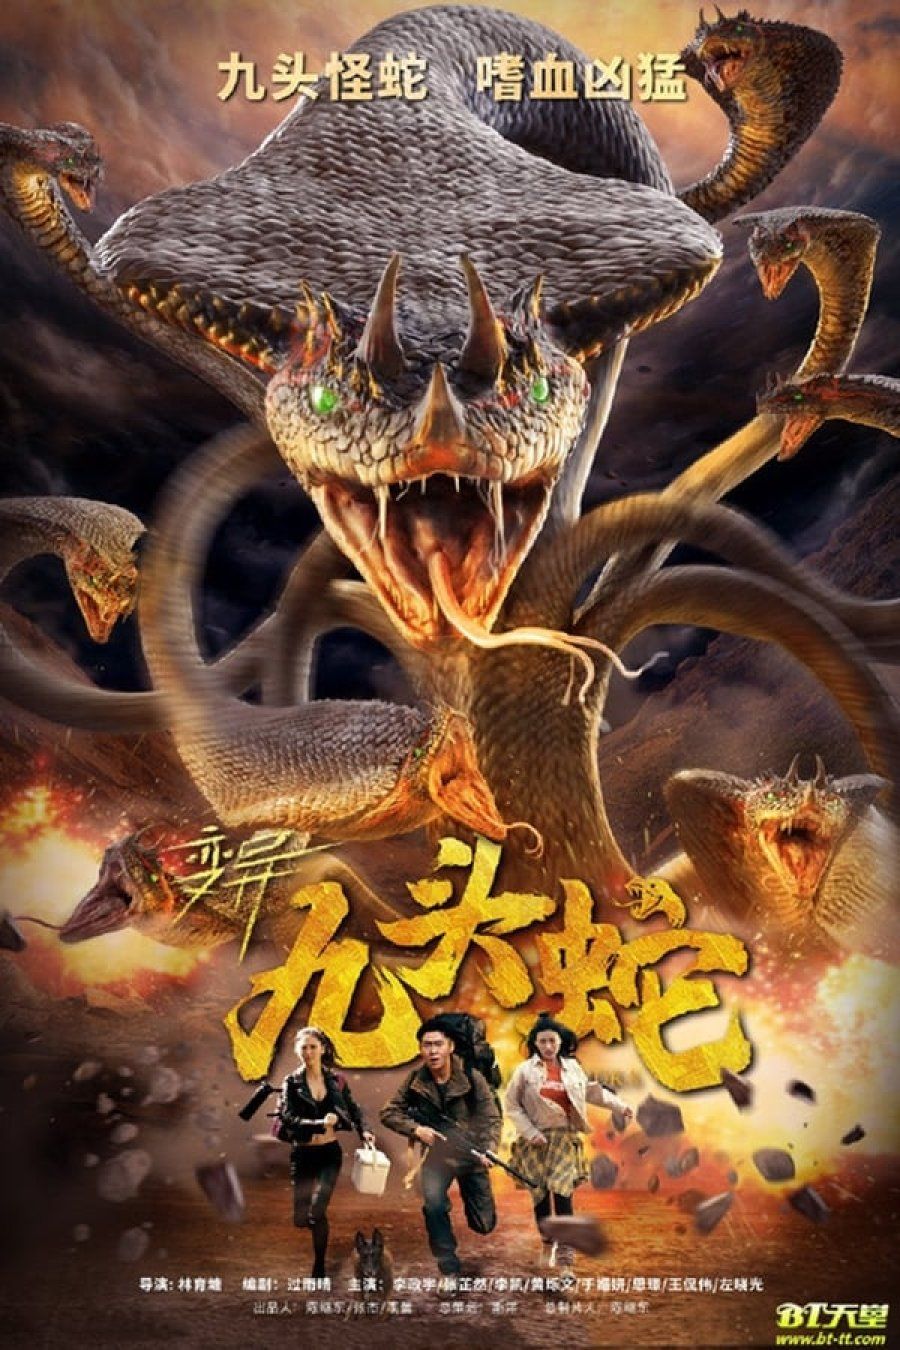 Variation Hydra (2020) Hindi ORG Dubbed HDRip download full movie